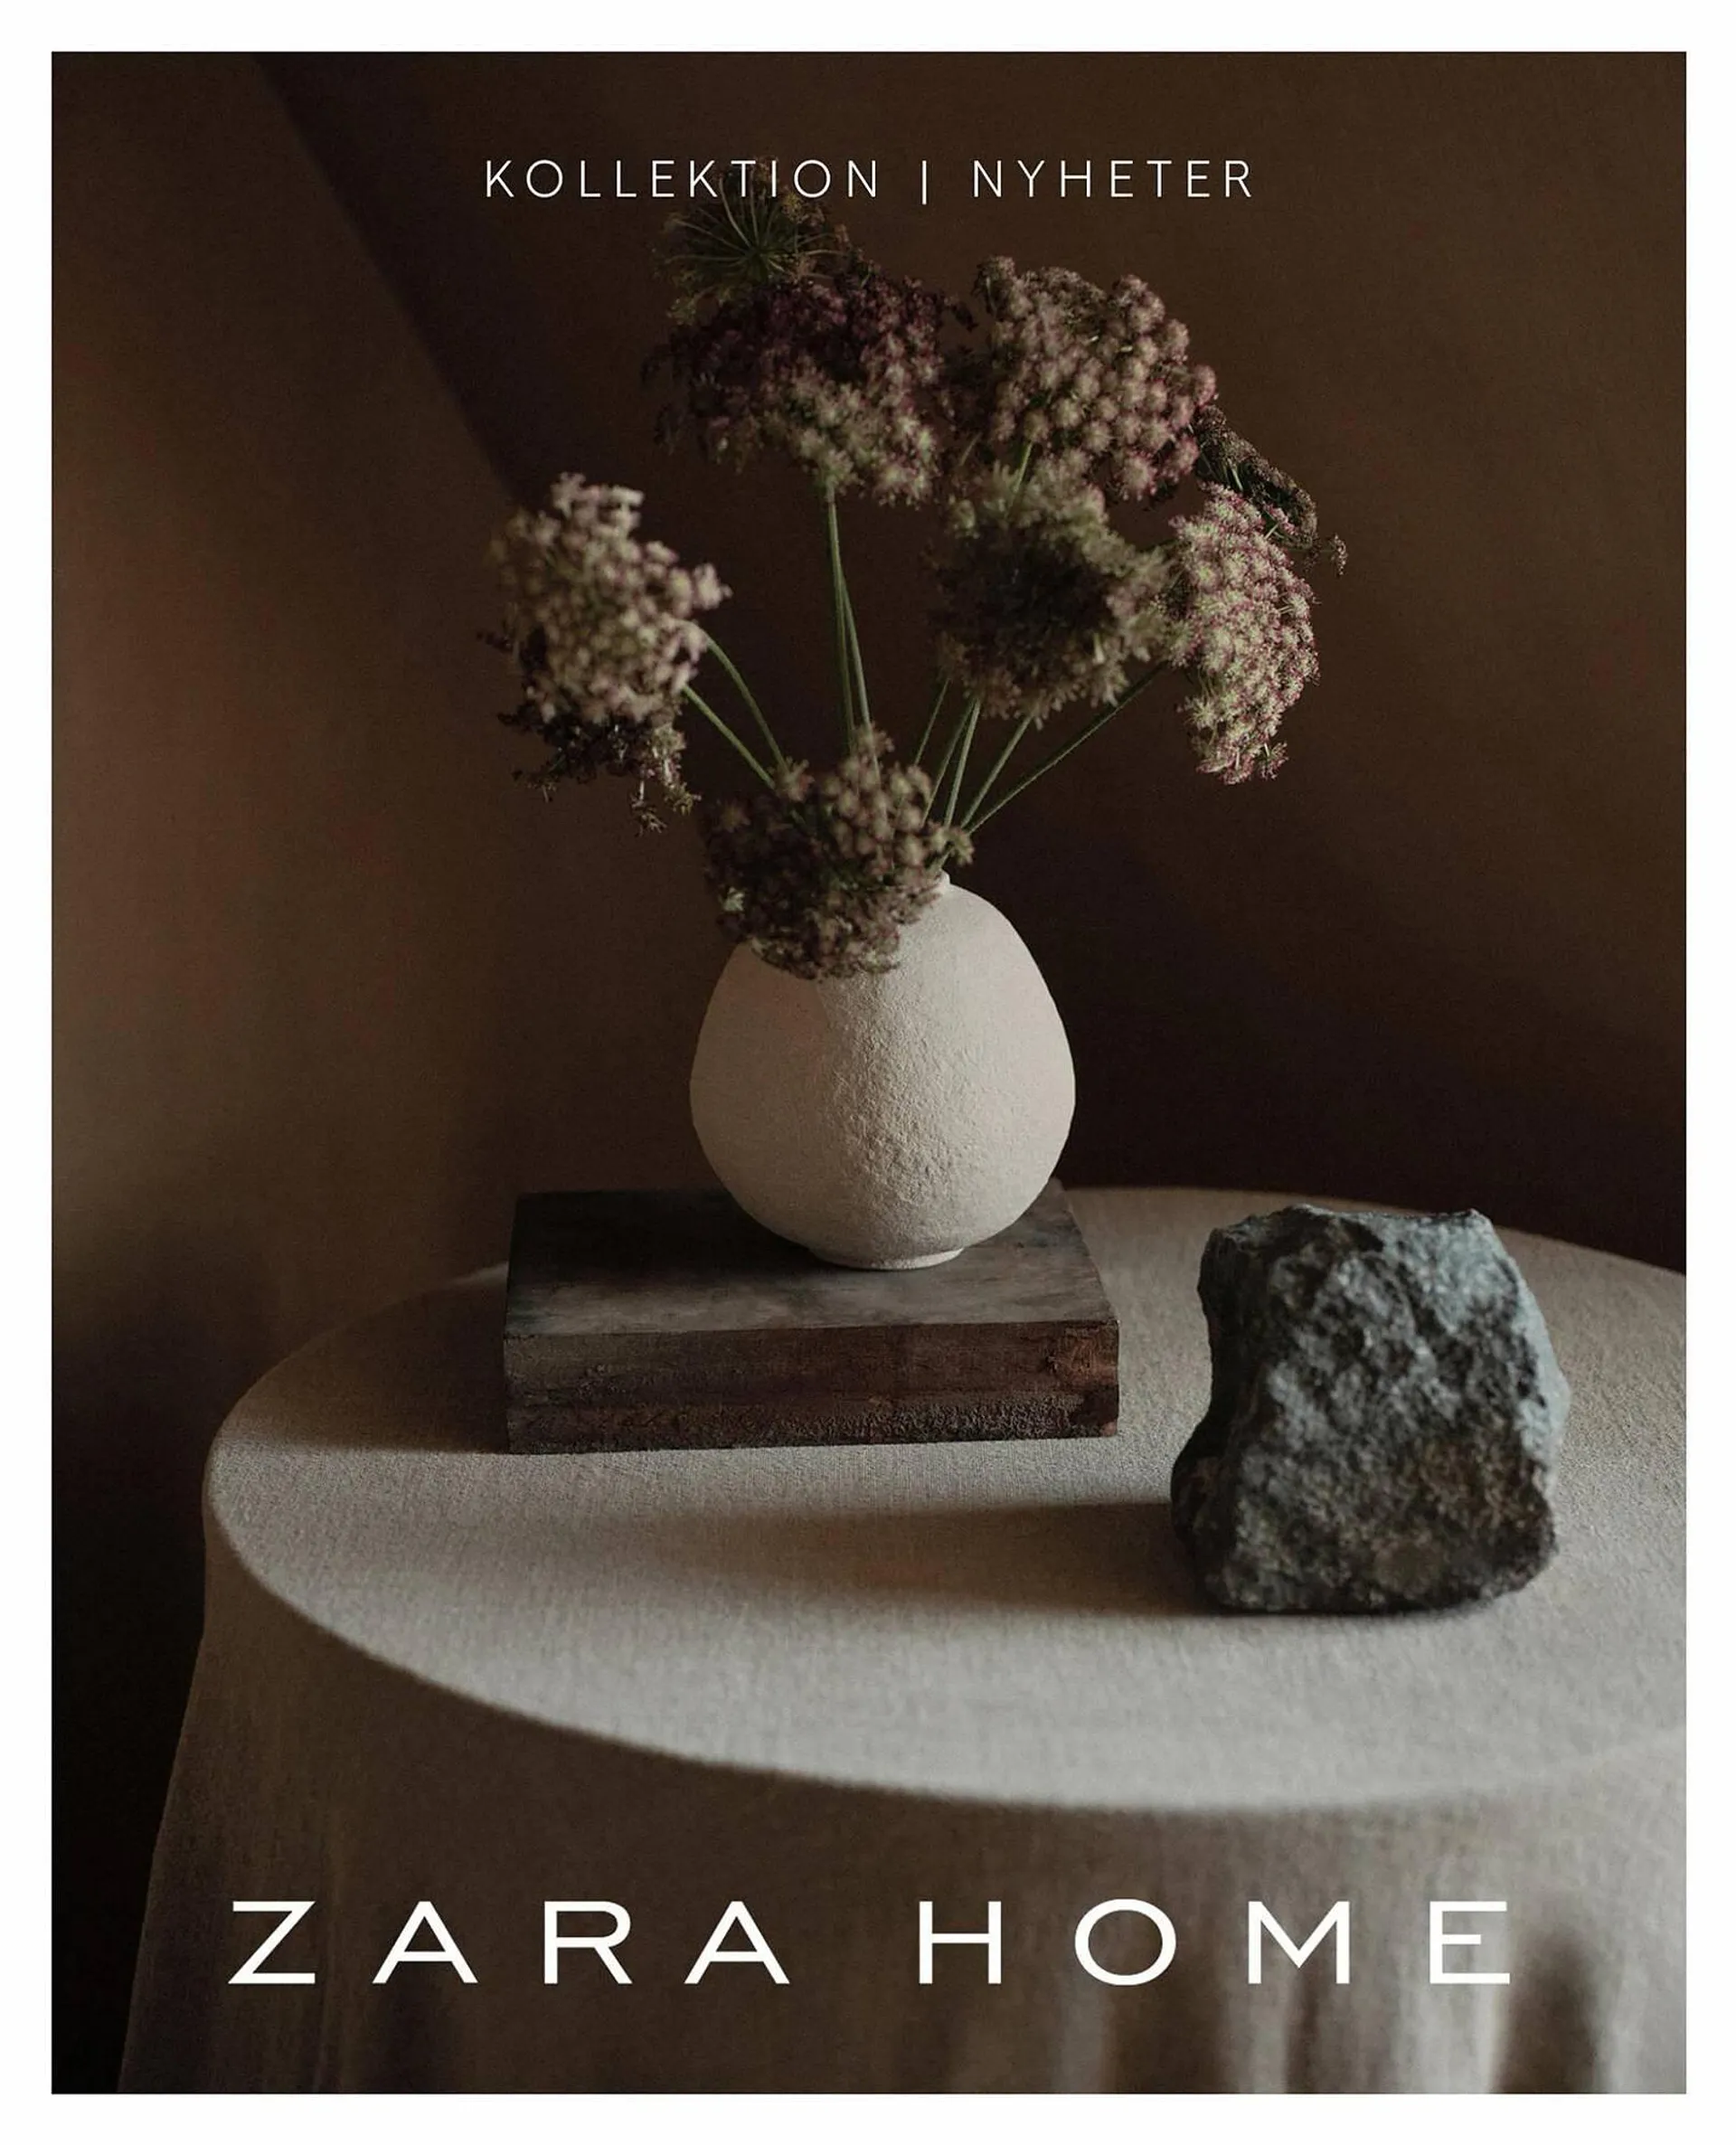 ZARA HOME reklamblad - 1